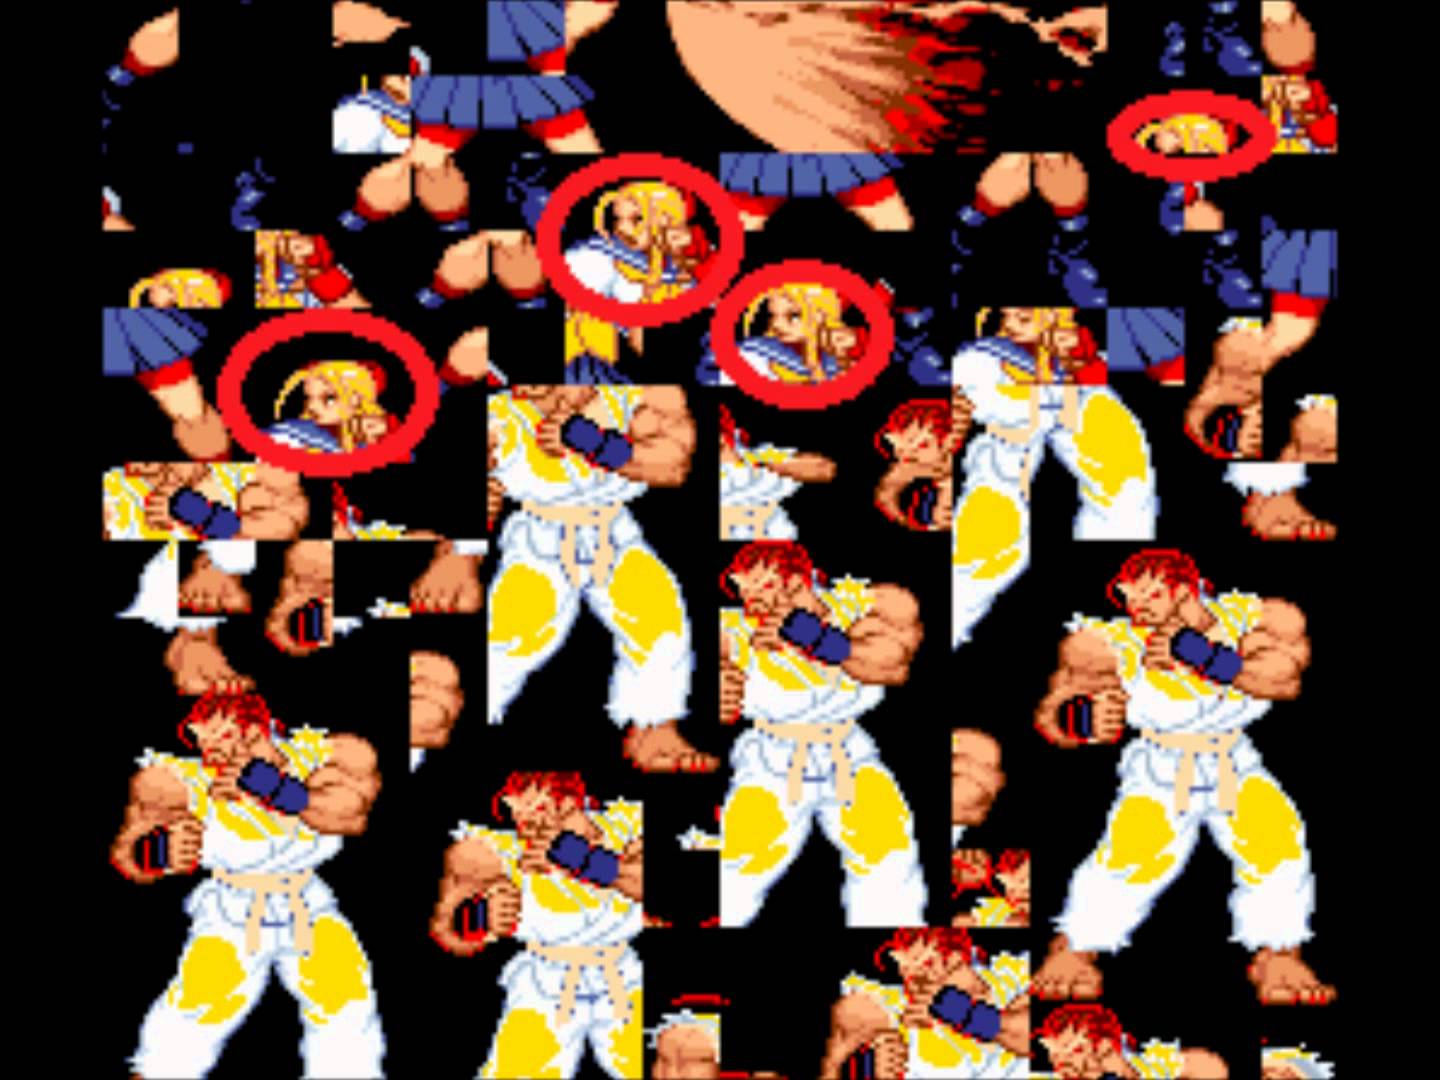 Marvel Super Heroes Vs. Street Fighter HD wallpapers, Desktop wallpaper - most viewed